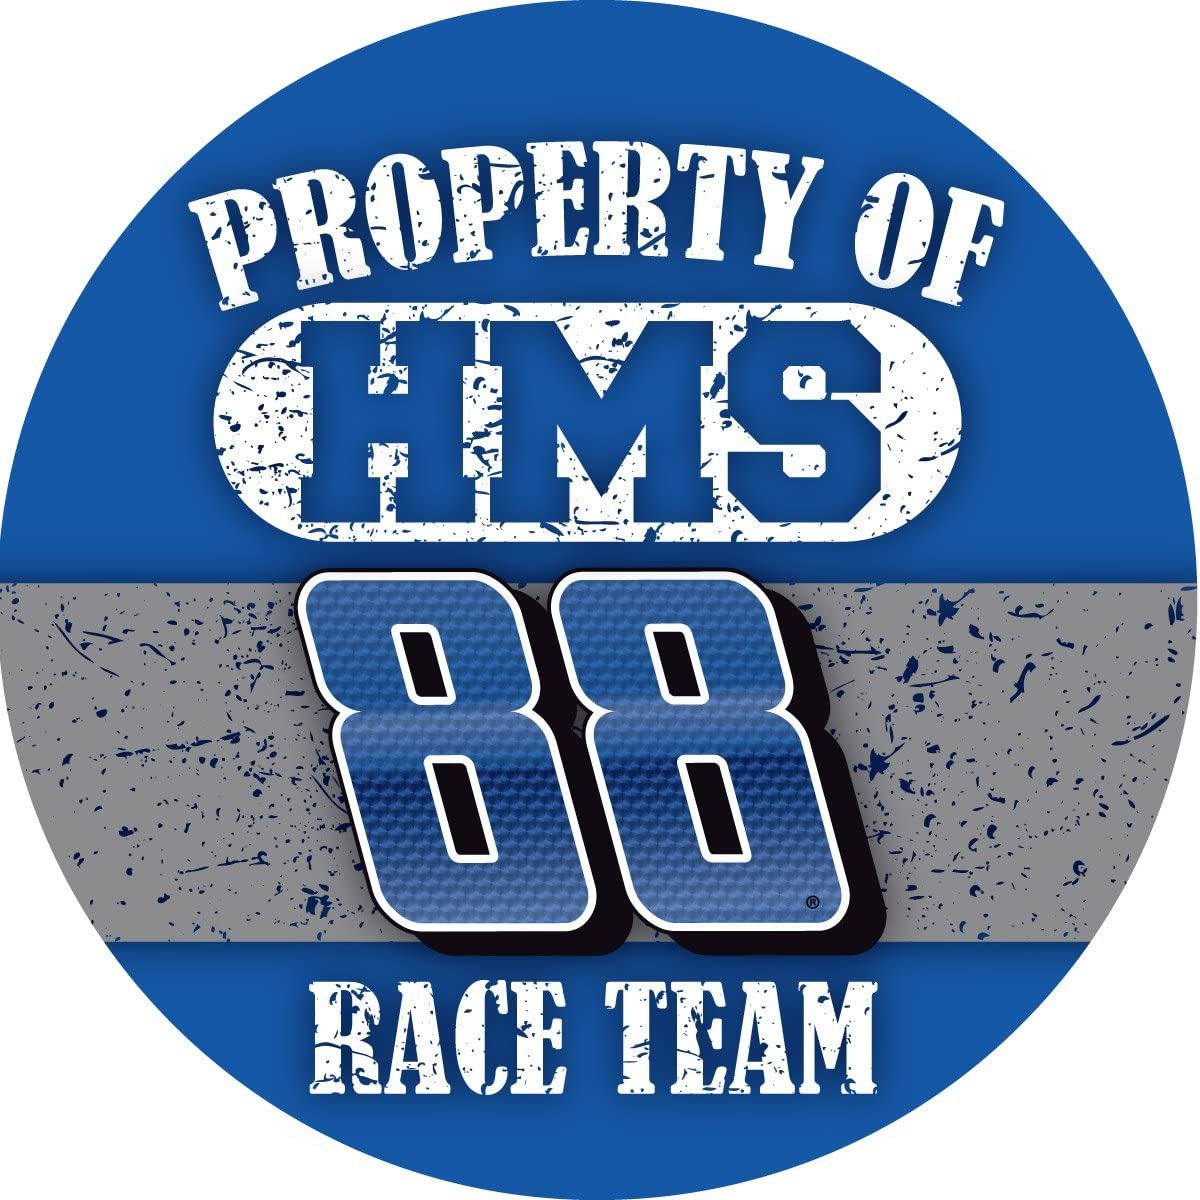 NASCAR #88 Dale Earnhardt Jr 4" Round "Property Of" Race Team Magnet-New for 2016!